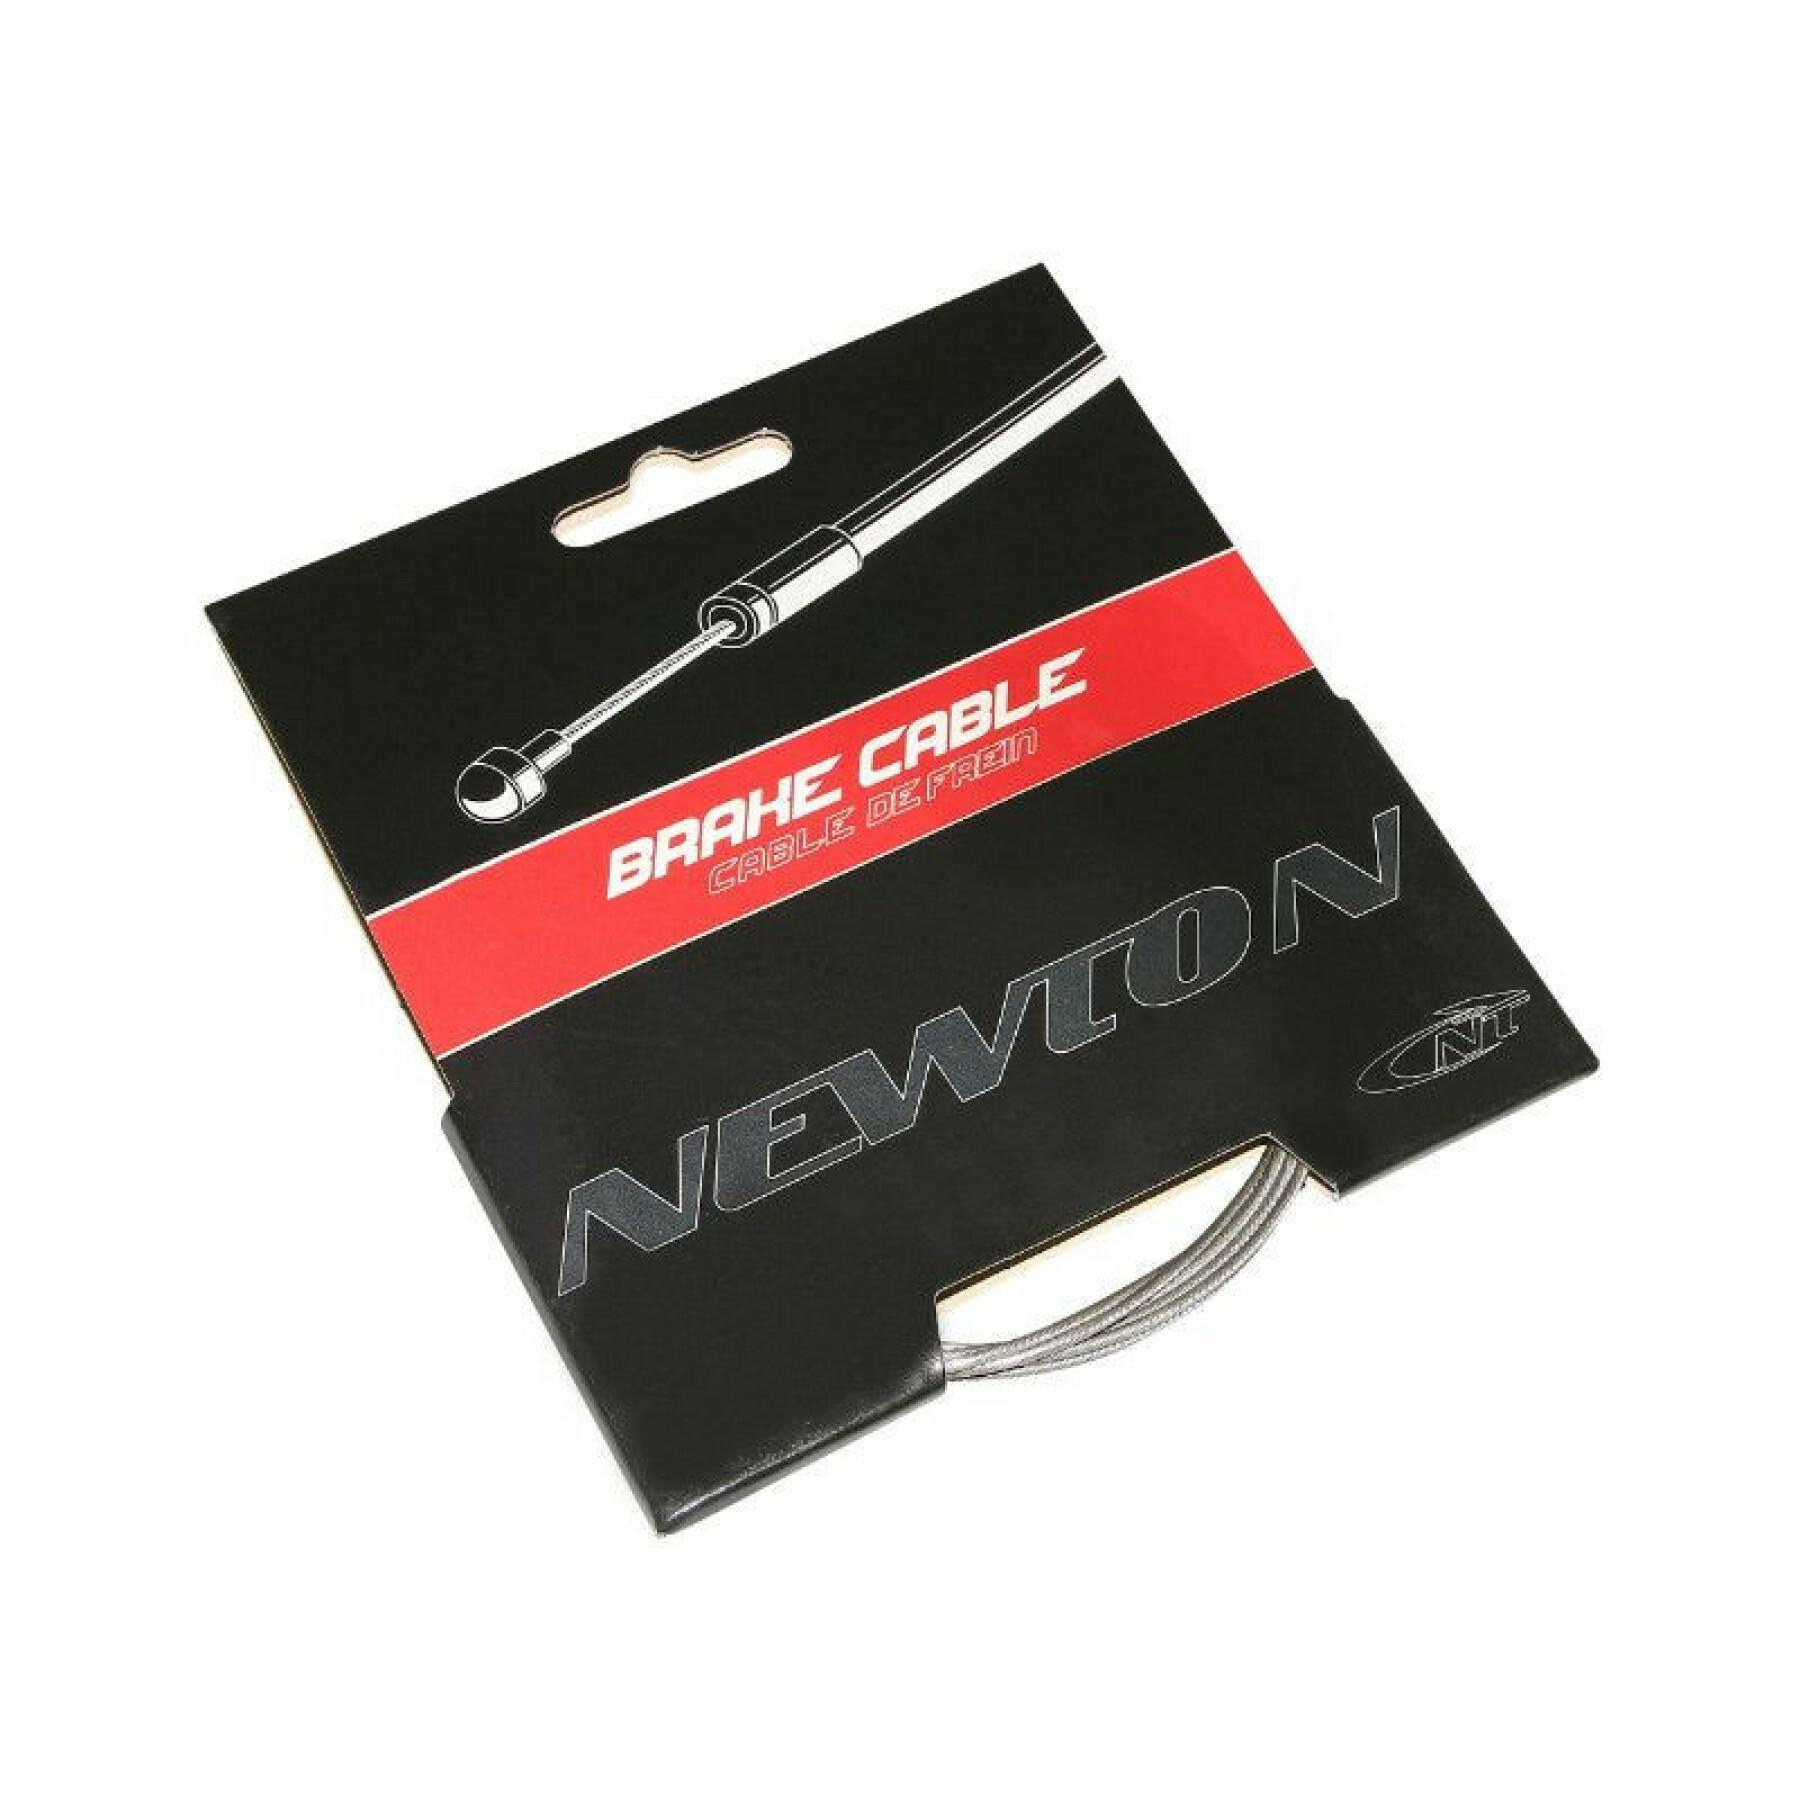 Brake cable for road bikes Newton Shimano